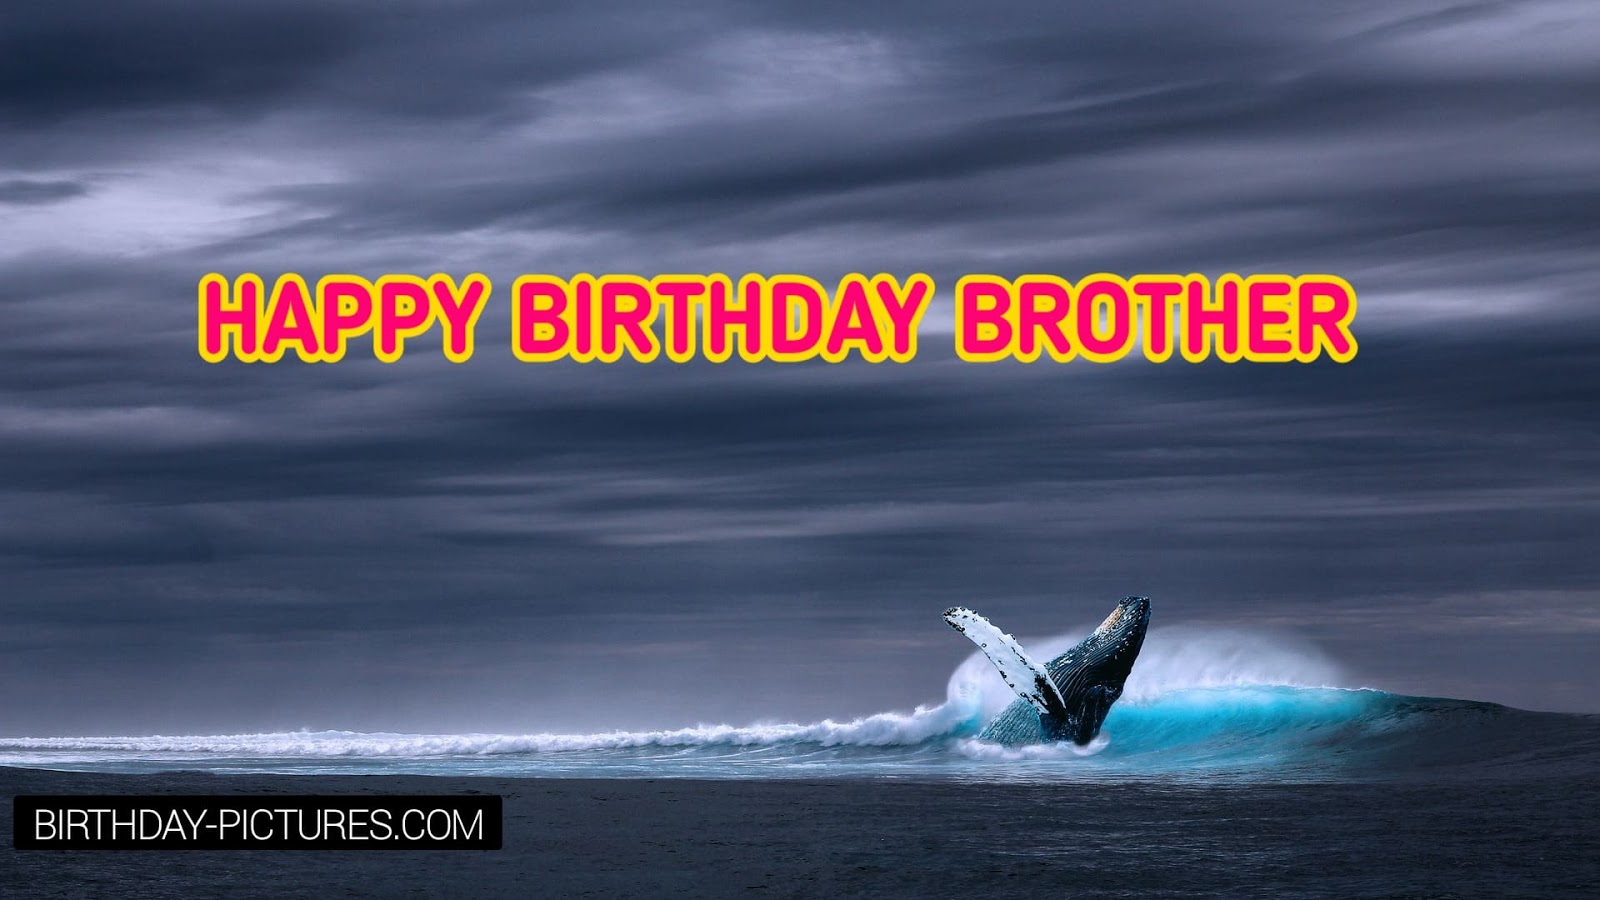 Brother Birthday Wallpaper Hd - Humpback Whale - 1600x900 Wallpaper -  